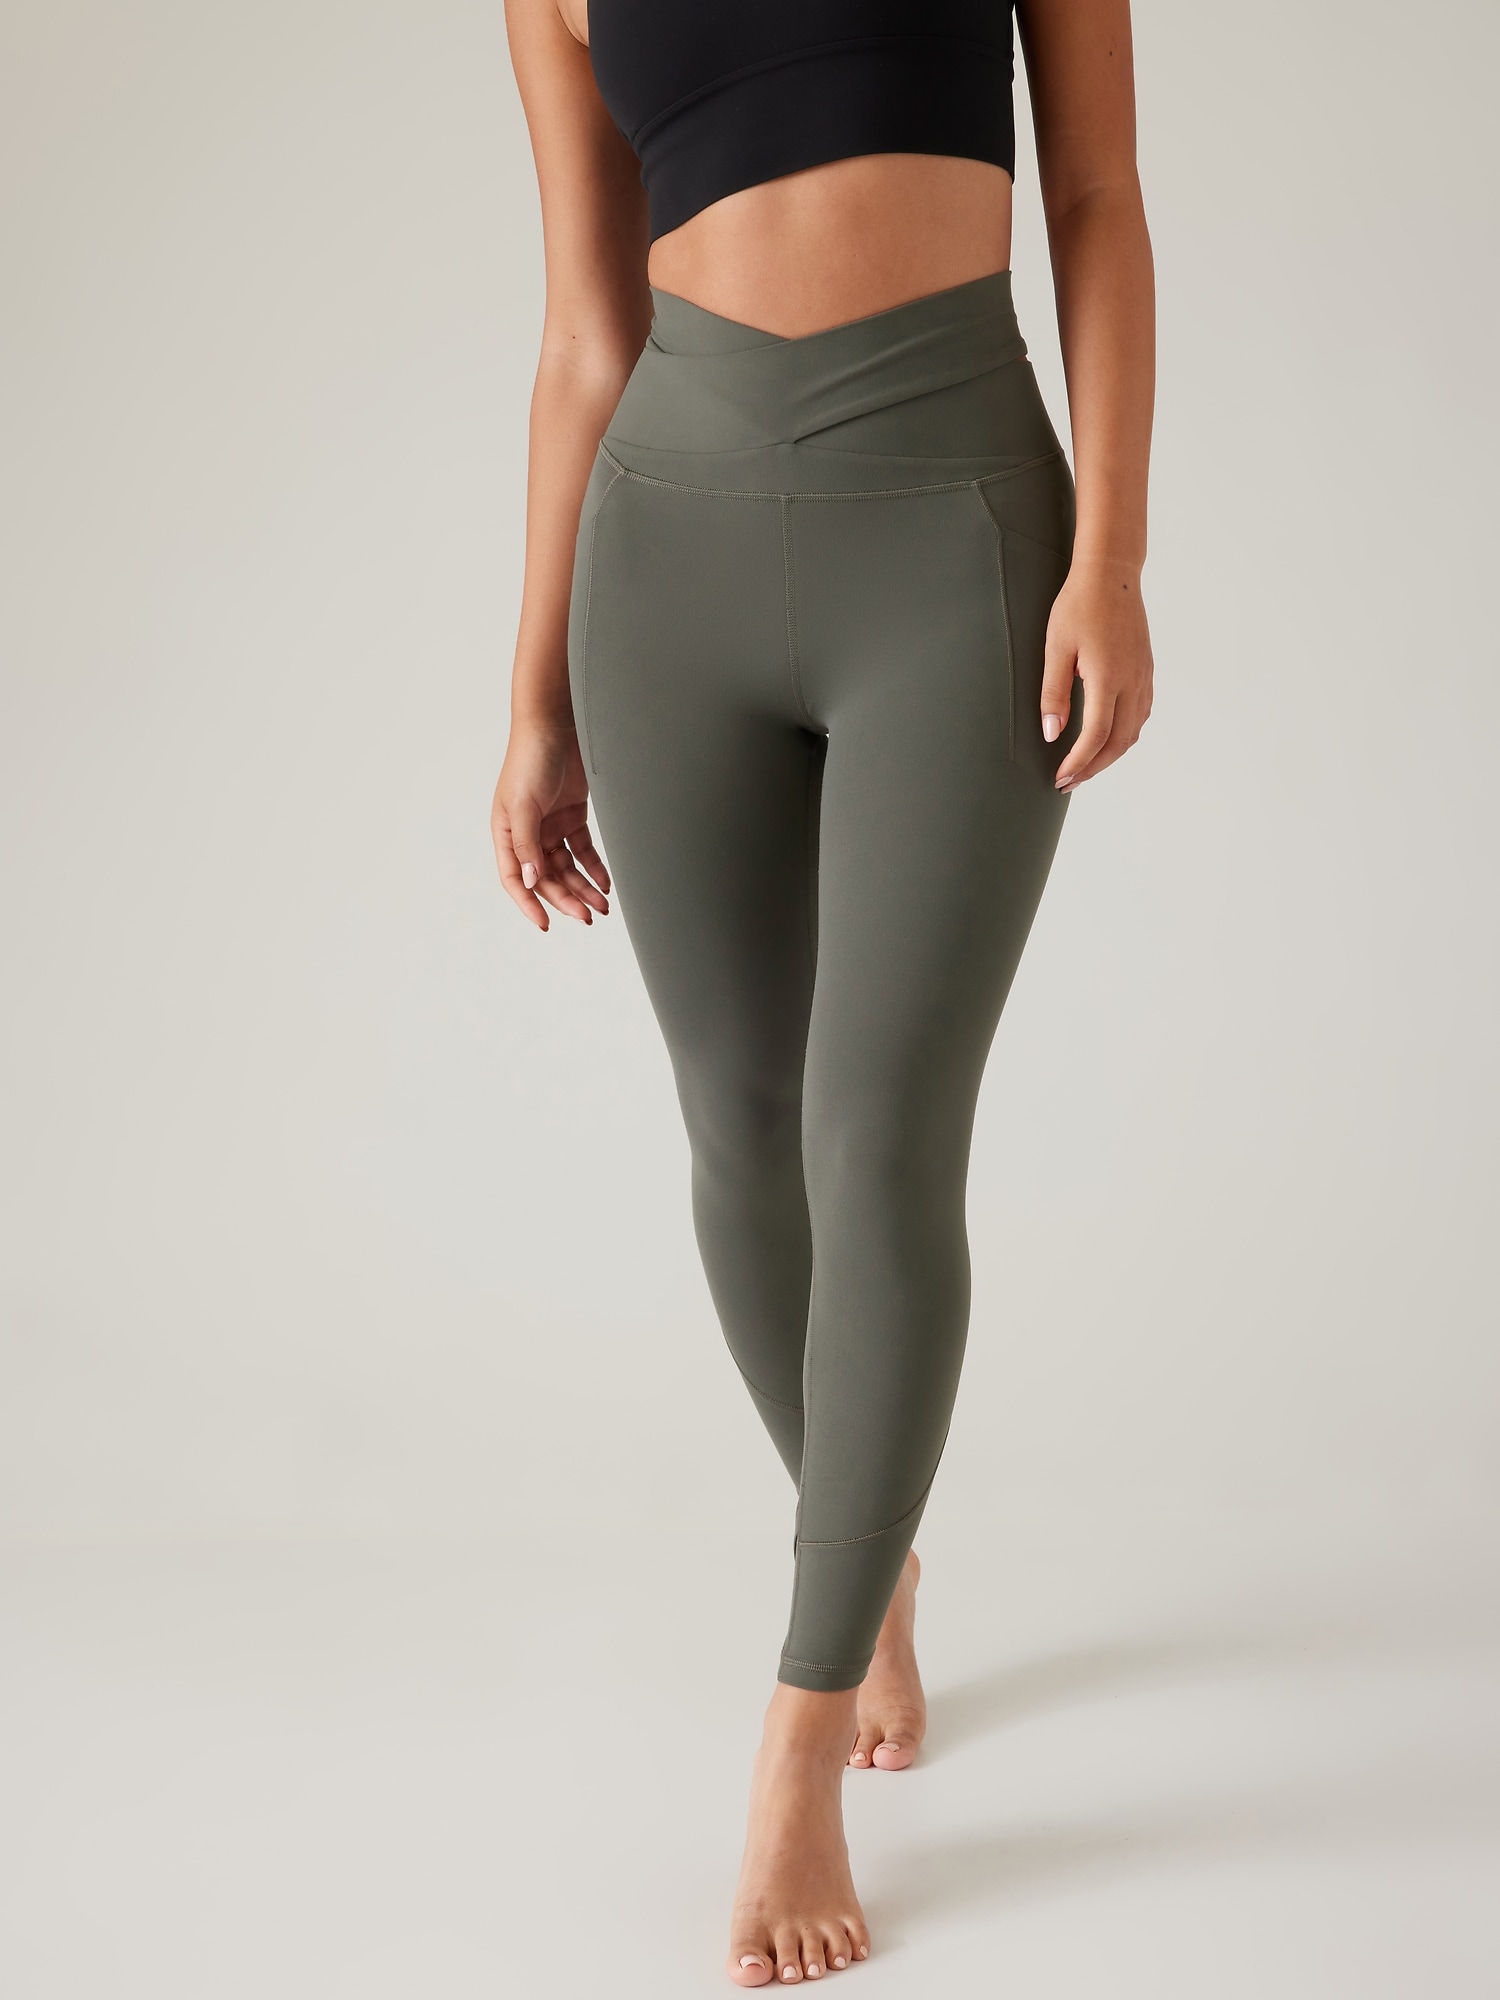 LULULEMON gray stirrup leggings (NULU fabric), Women's Fashion